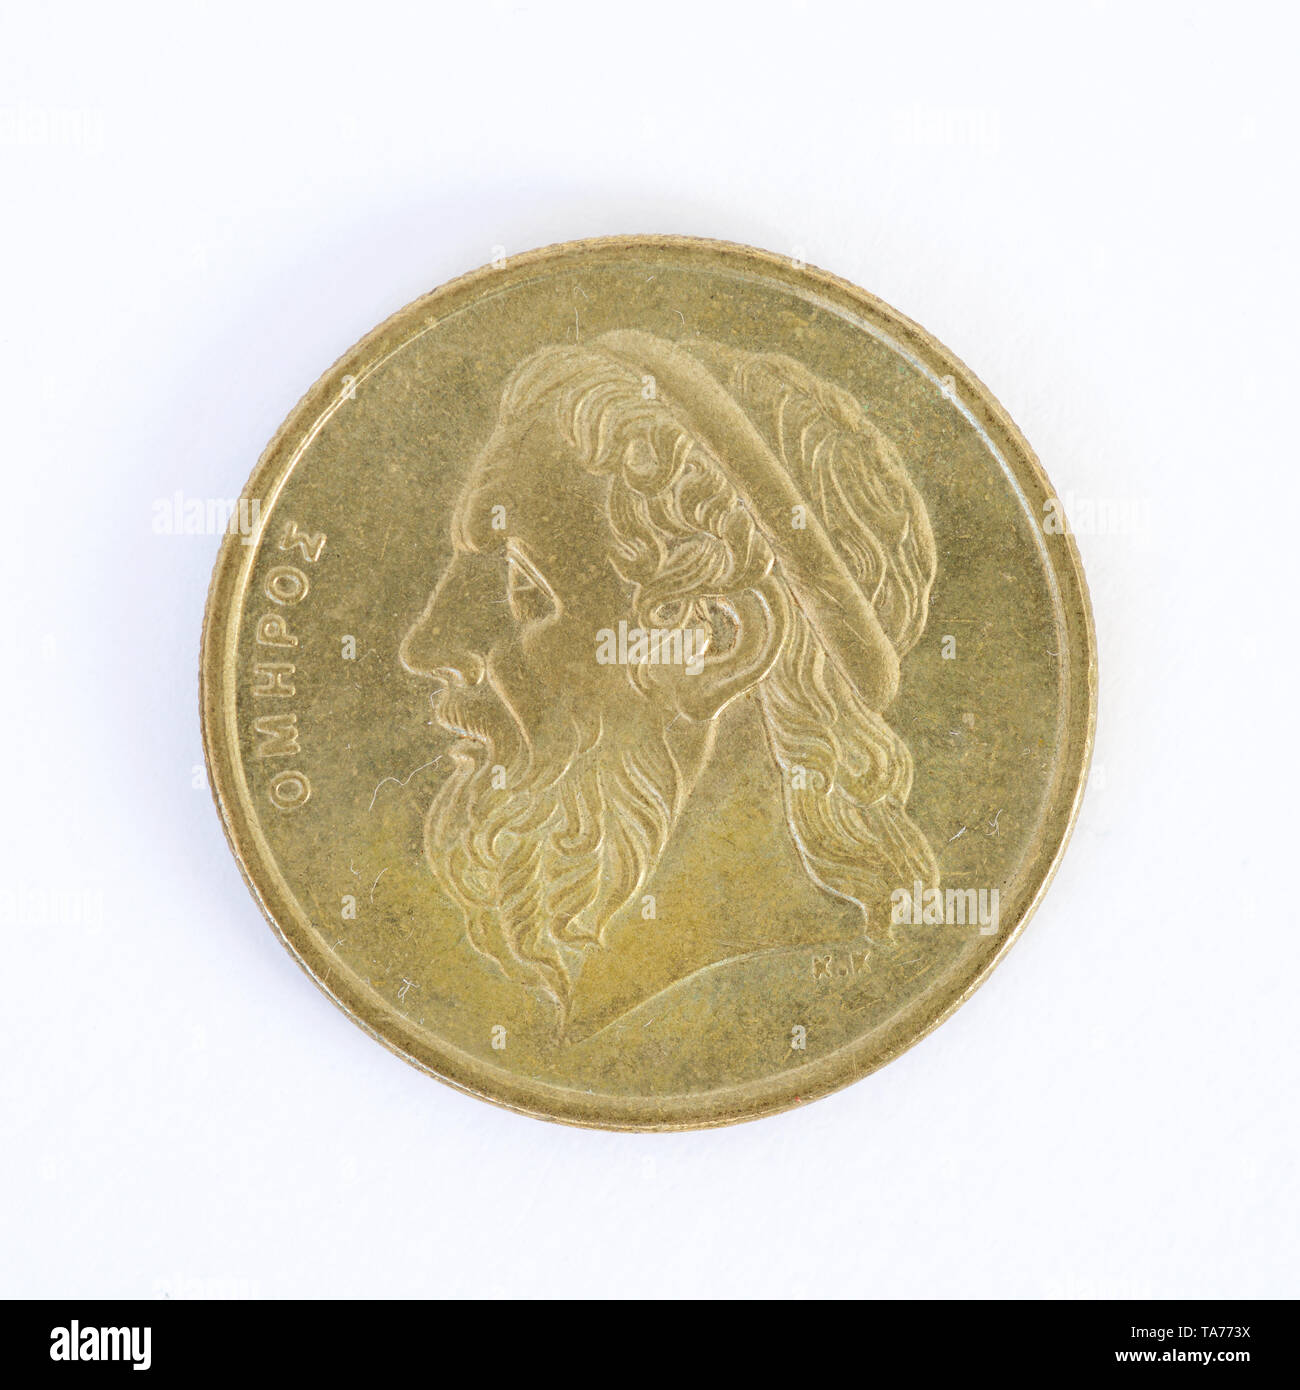 Greek 50 Drachmes coin - 1988 Stock Photo